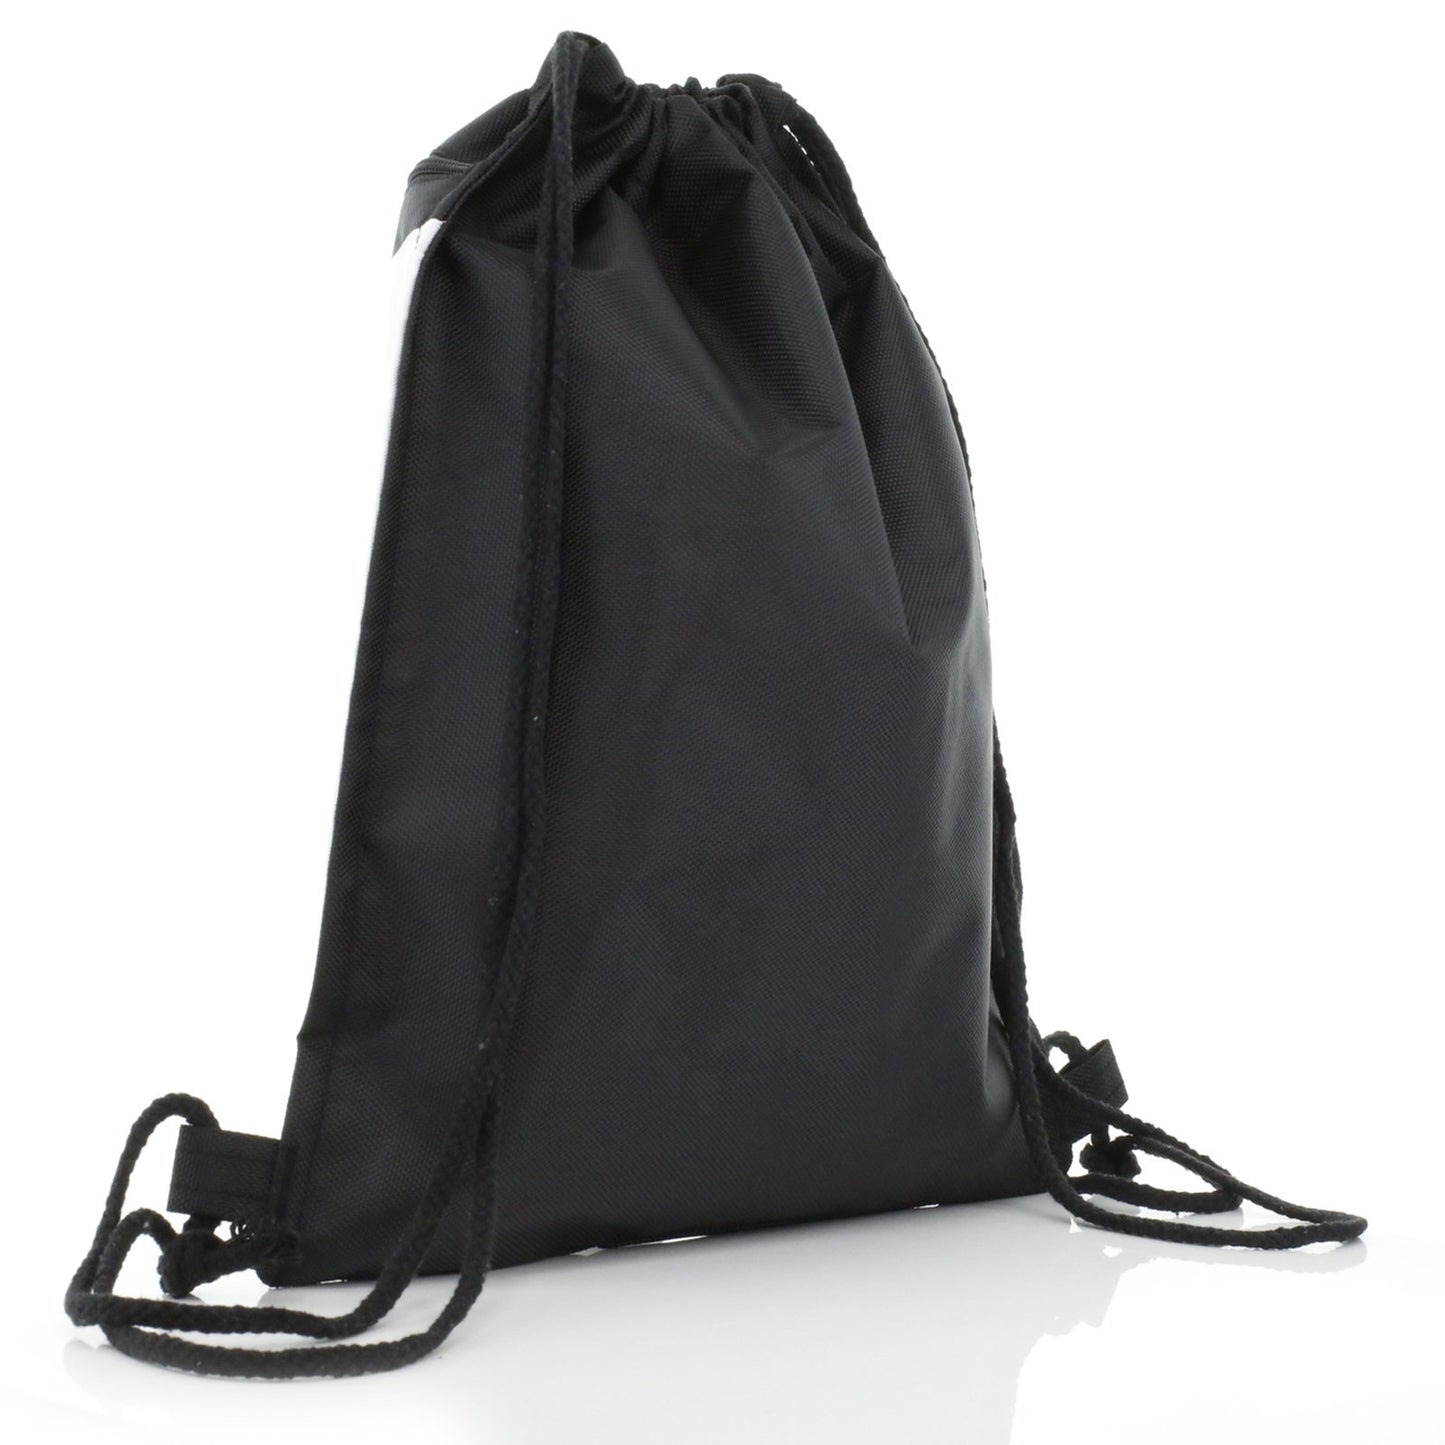 Personalised Alpaca Unicorn and Name Black Drawstring Backpack